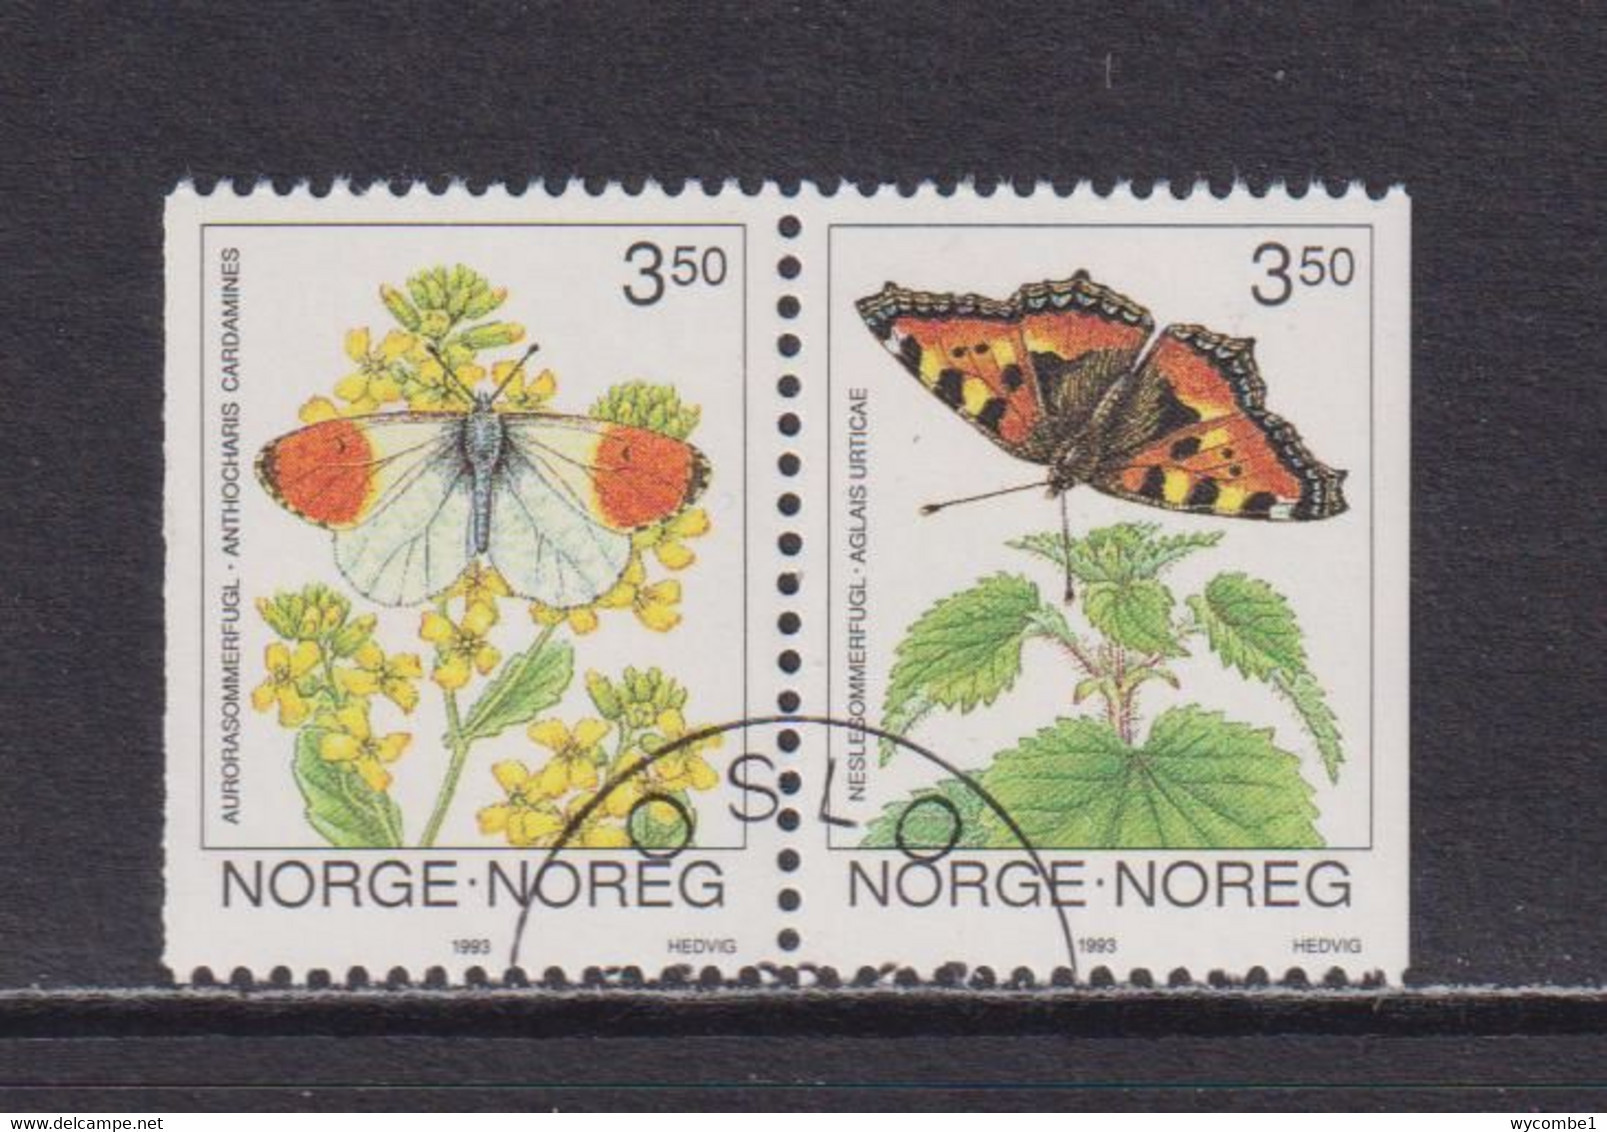 NORWAY - 1993 Butterflies Booklet Pair Used As Scan - Used Stamps